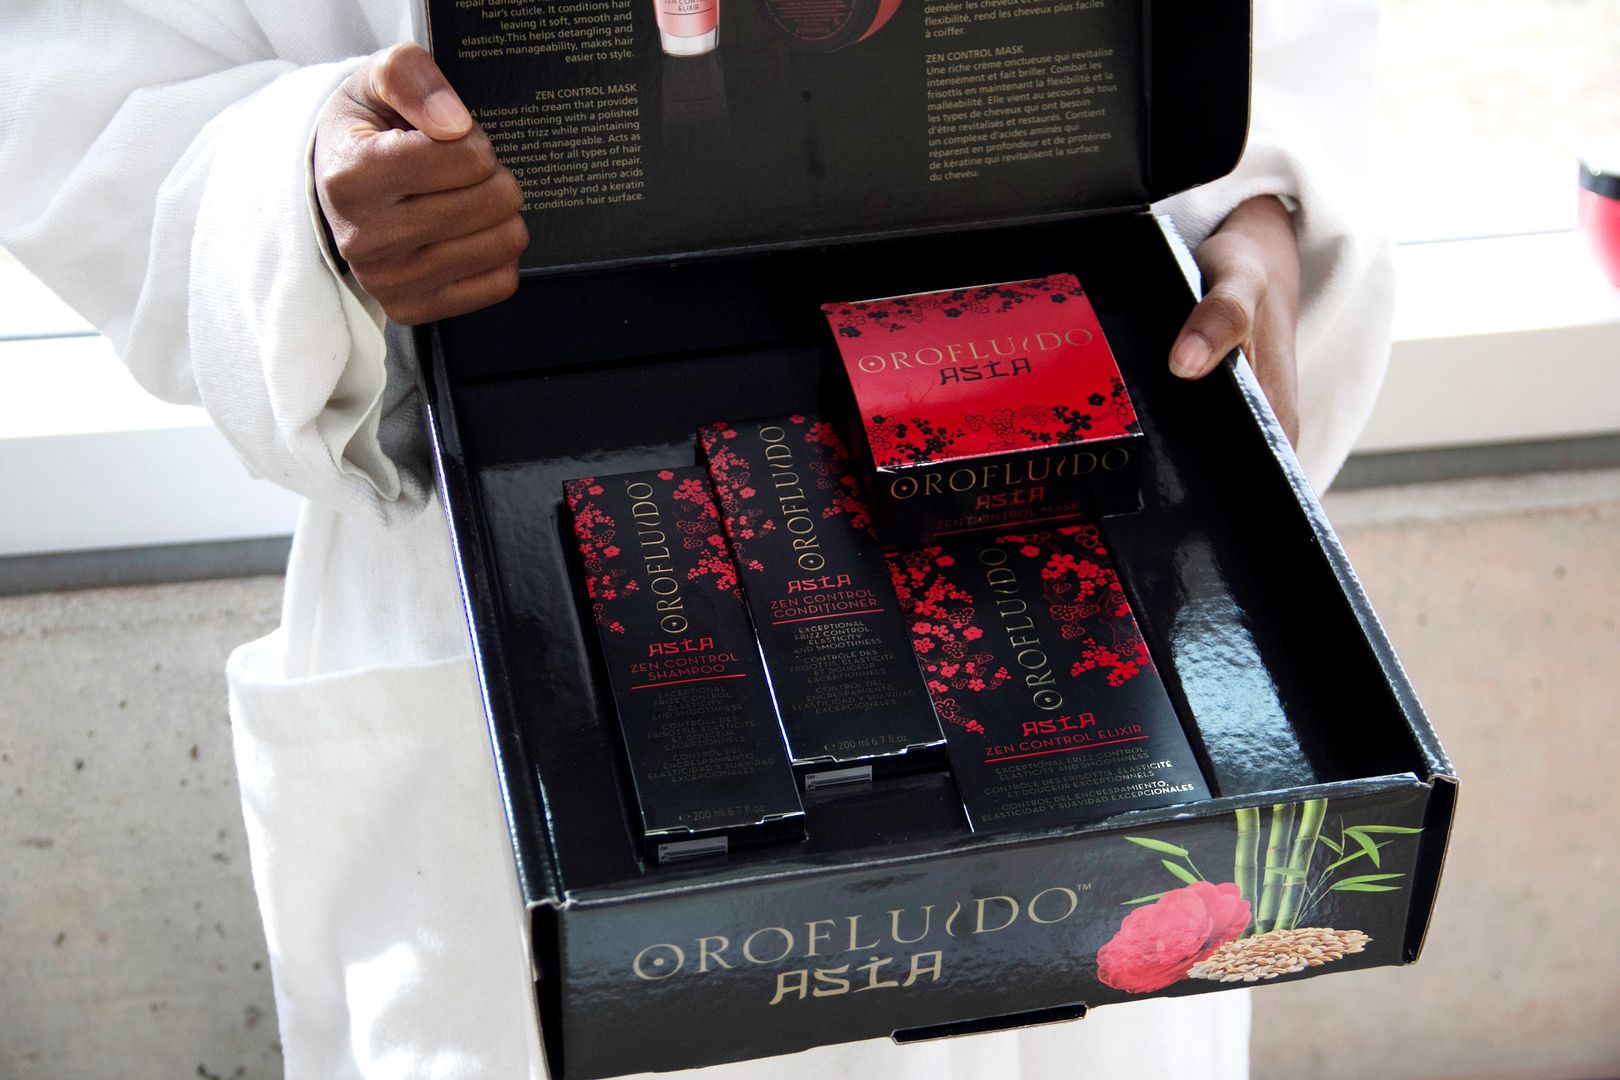 Orofluido Asia The Zen Beauty Kit Review, Toronto Beauty Blogger